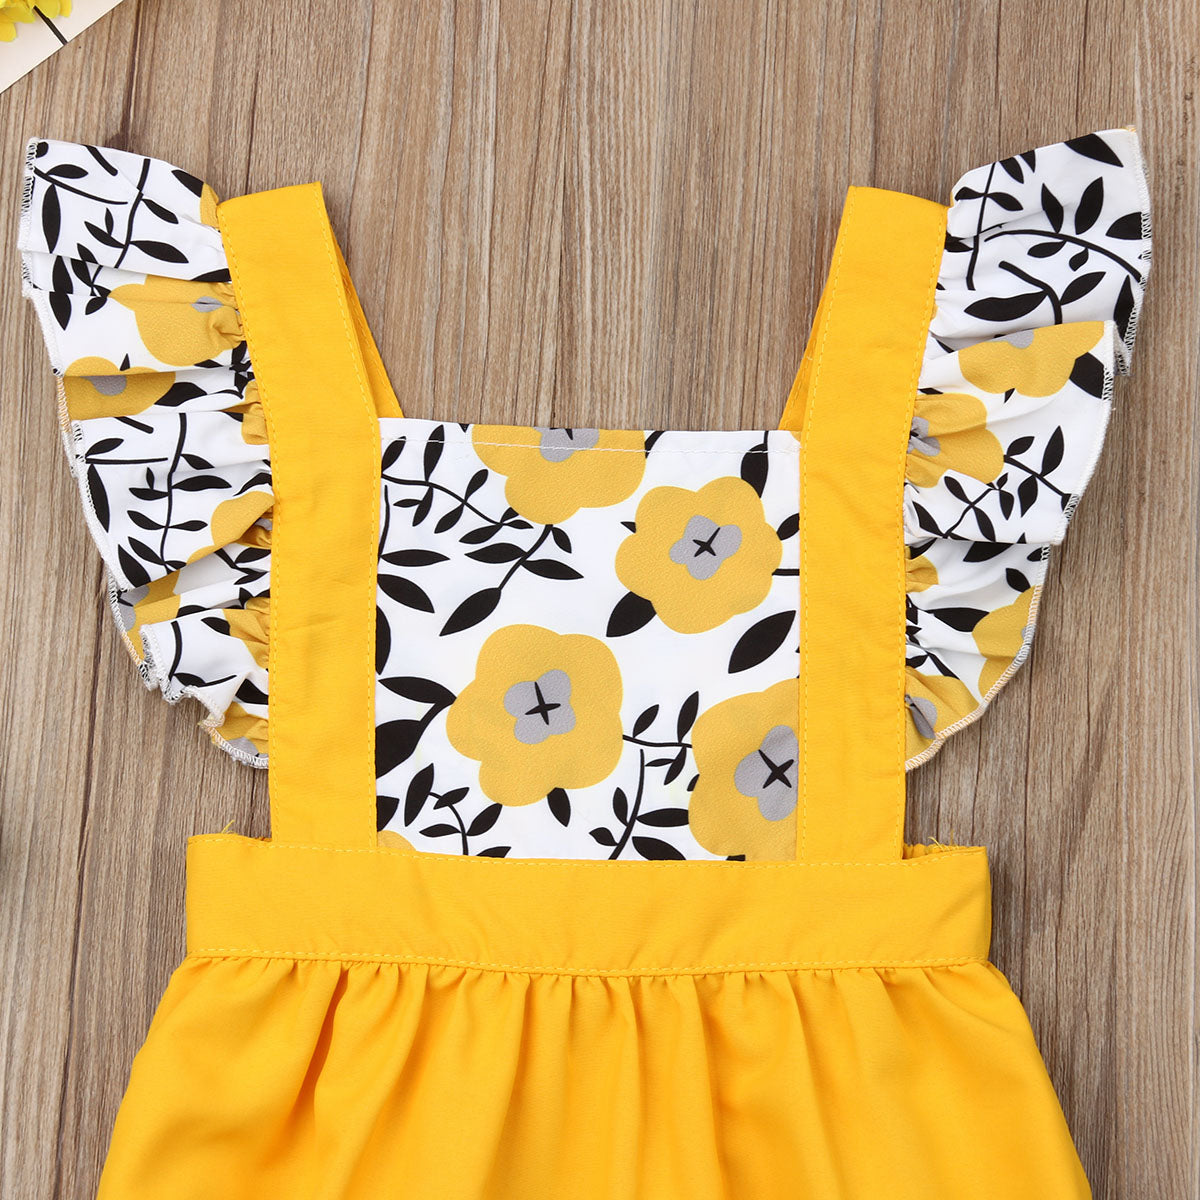 Pudcoco Summer Newborn Baby Girl Clothes Fly Sleeve Sunflower Print